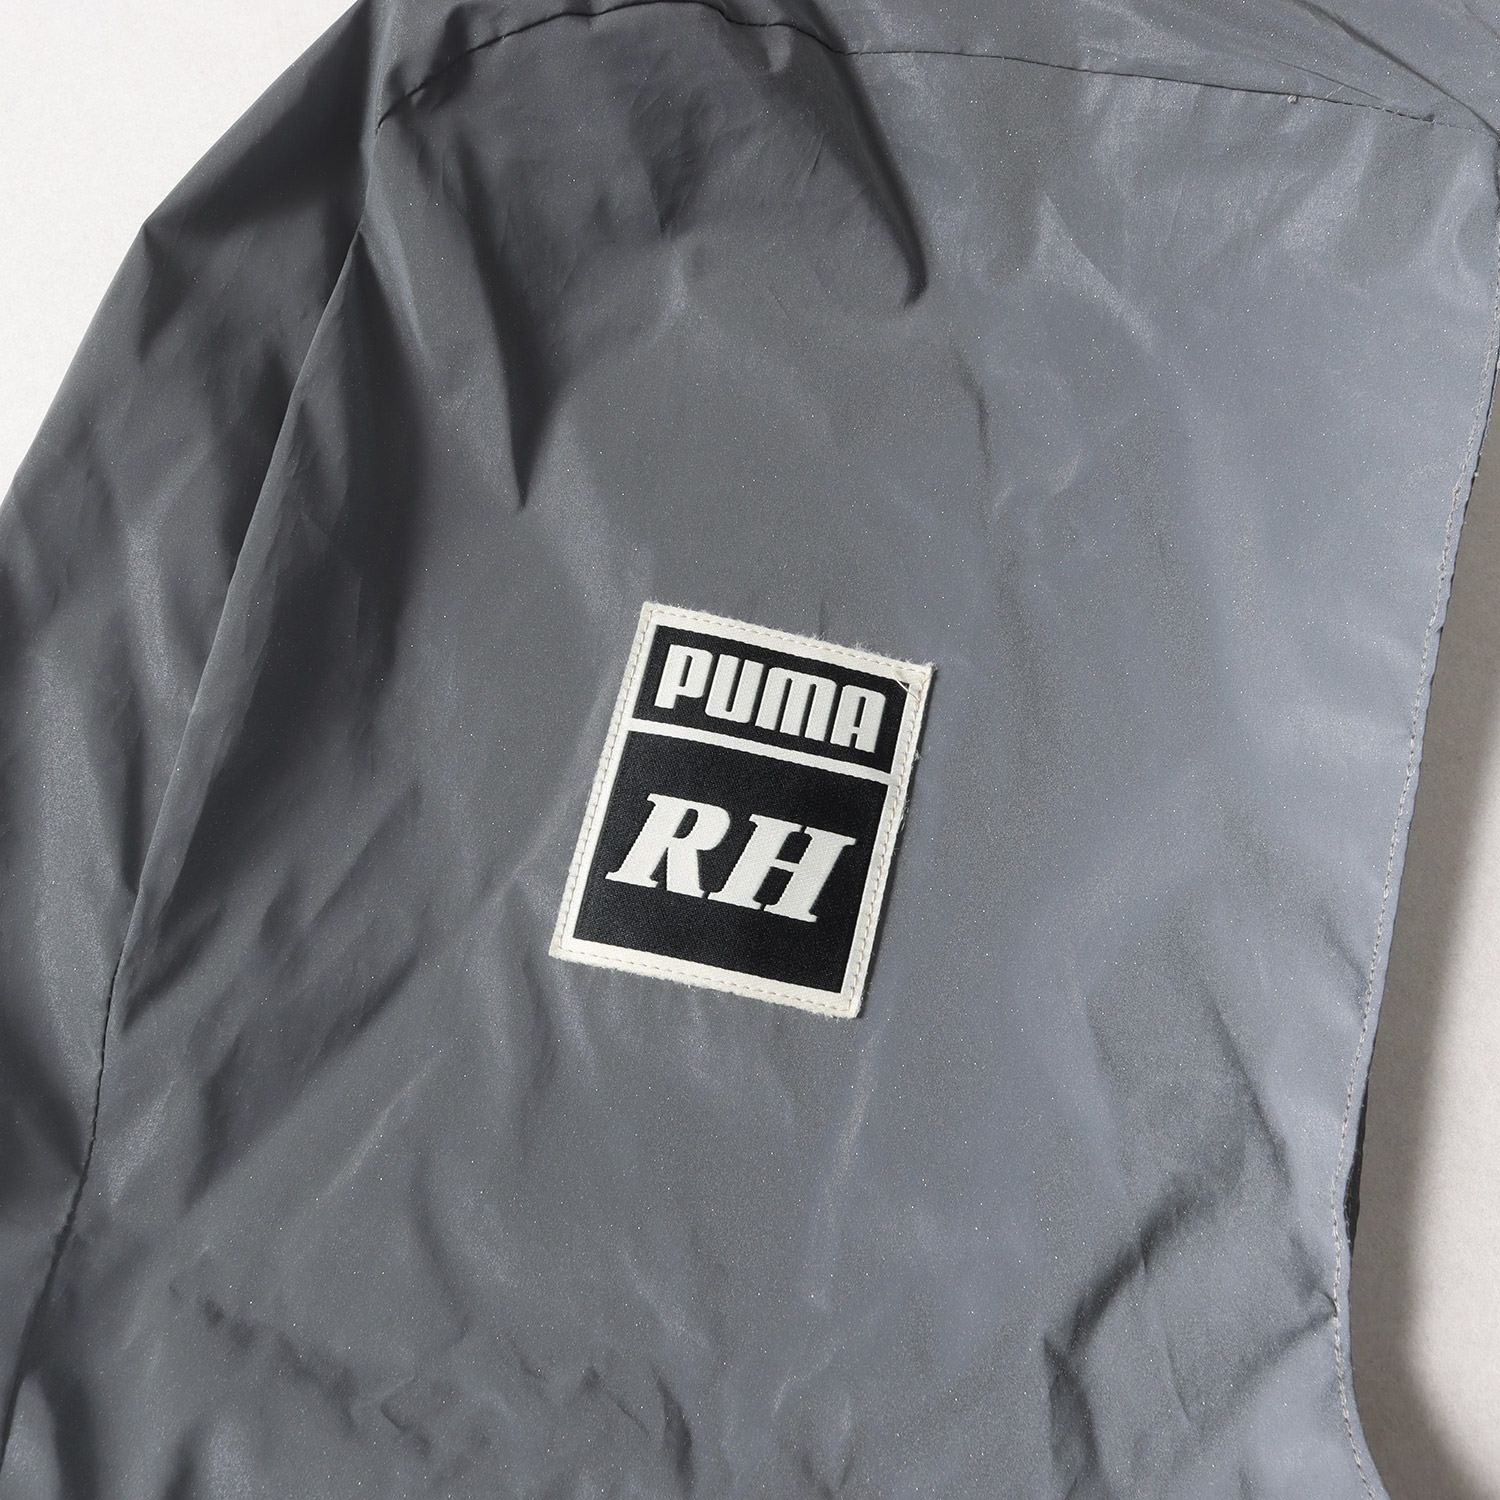 RHUDE ルード ジャケット サイズ:XS PUMA プーマ ワッペン付き リフレクター ハーフジップ プルオーバー ジャケット HZ Jacket  20SS ブルー アウター ブルゾン コラボ ブランド カジュアル